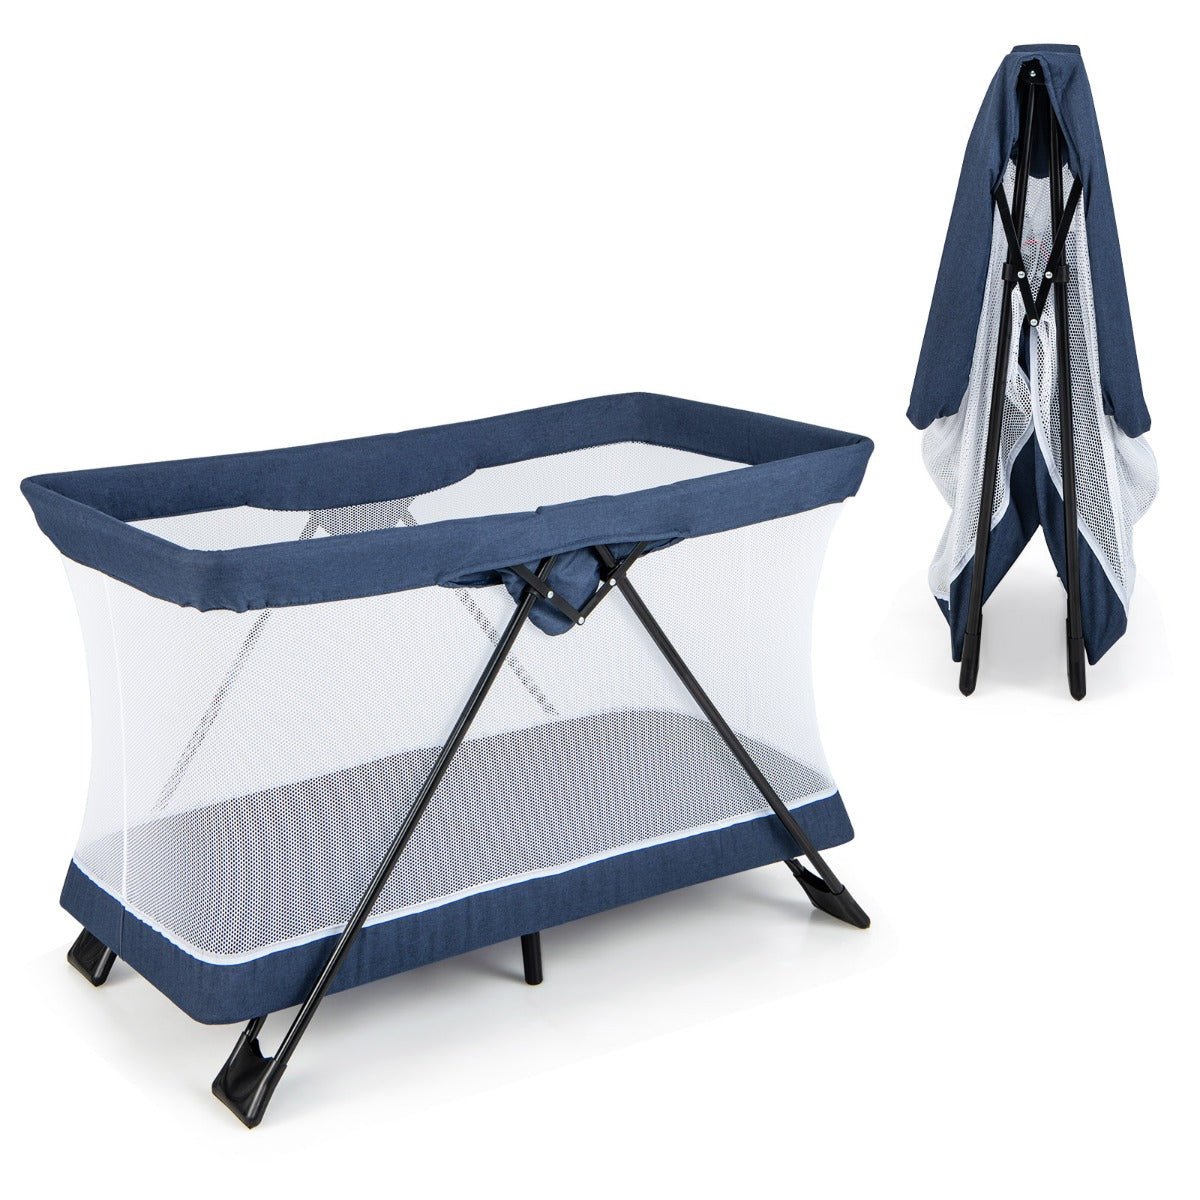 Shop Foldable Portacot Newborn Baby Cot for Infant & Toddler